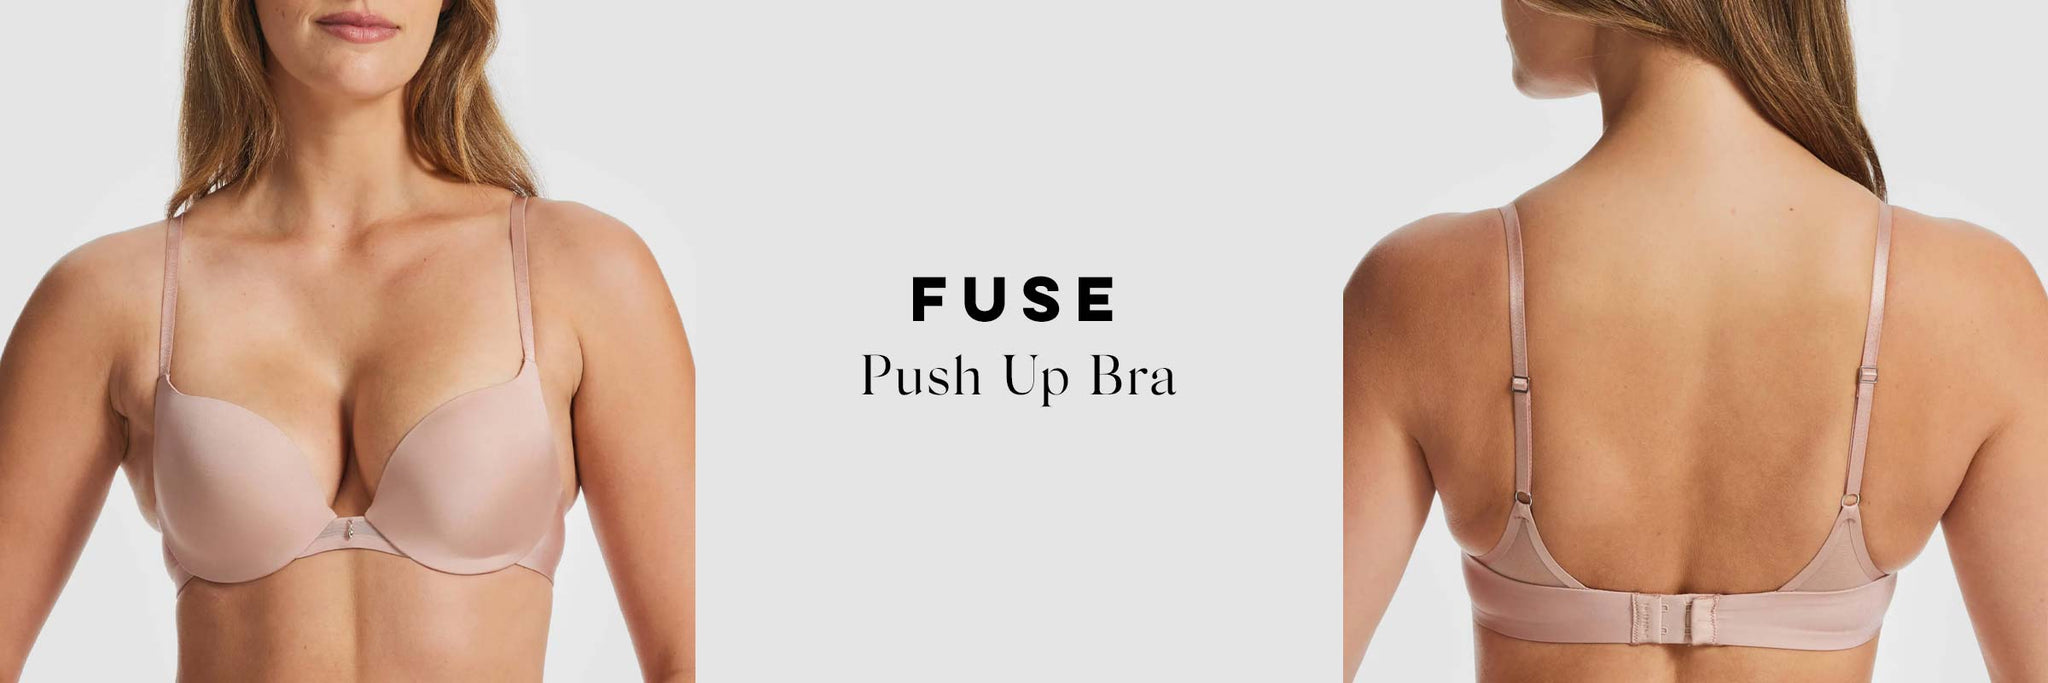 Fuse push up bra